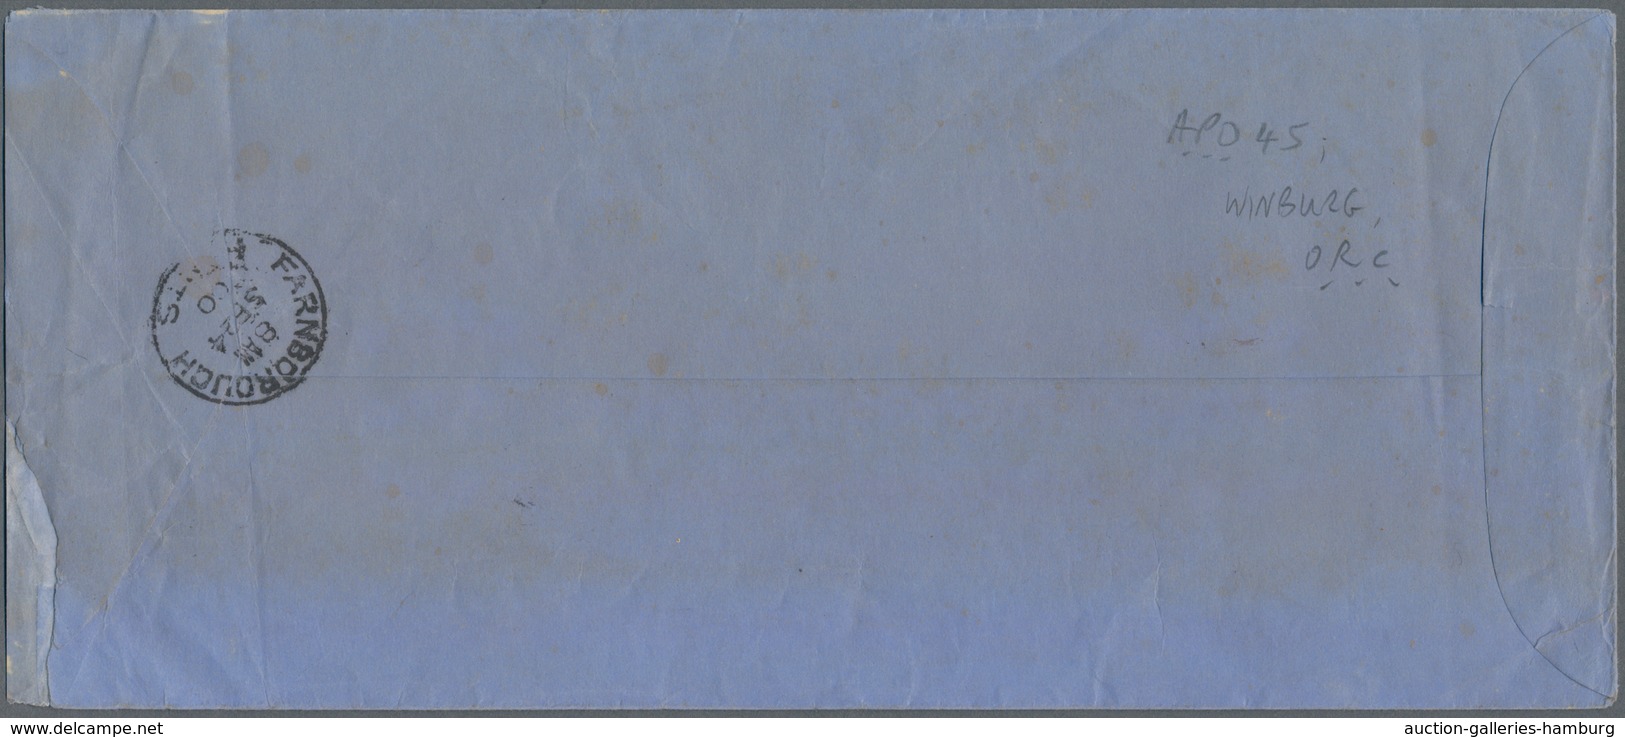 Südafrika: 1900 - 2nd BOER WAR AUG. 31 - OHMS - Large Envelope Endorsed NO STAMPS AVAILABLE - Ex COL - Cartas